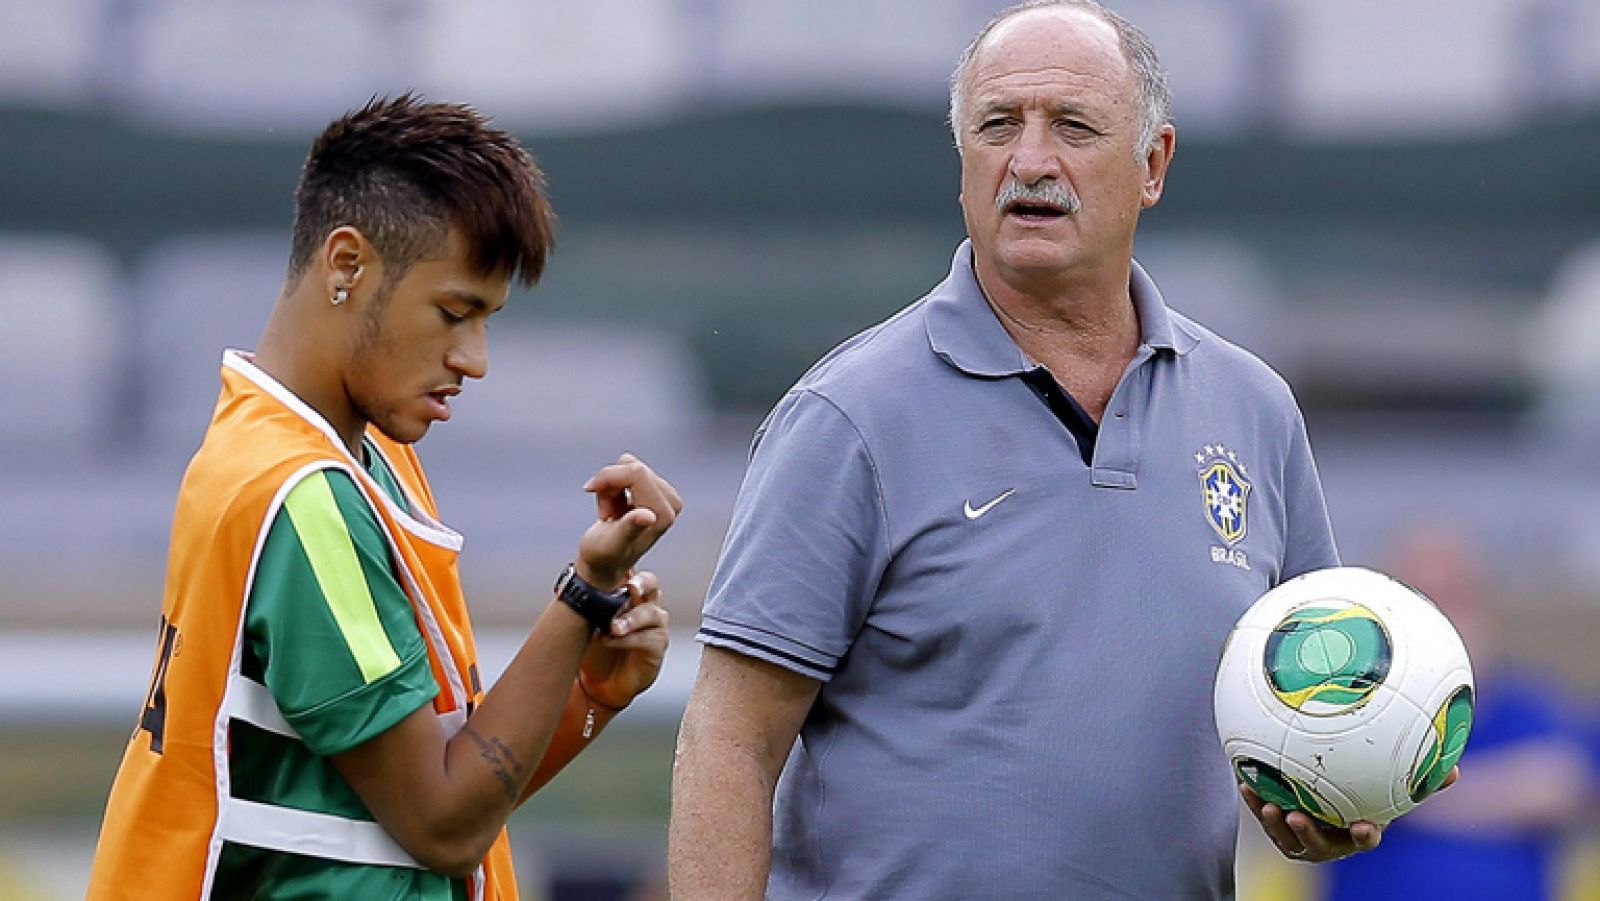 Telediario 1: Neymar, centro de un Brasil- Uruguay bajo la sombra del 'maracanazo' | RTVE Play